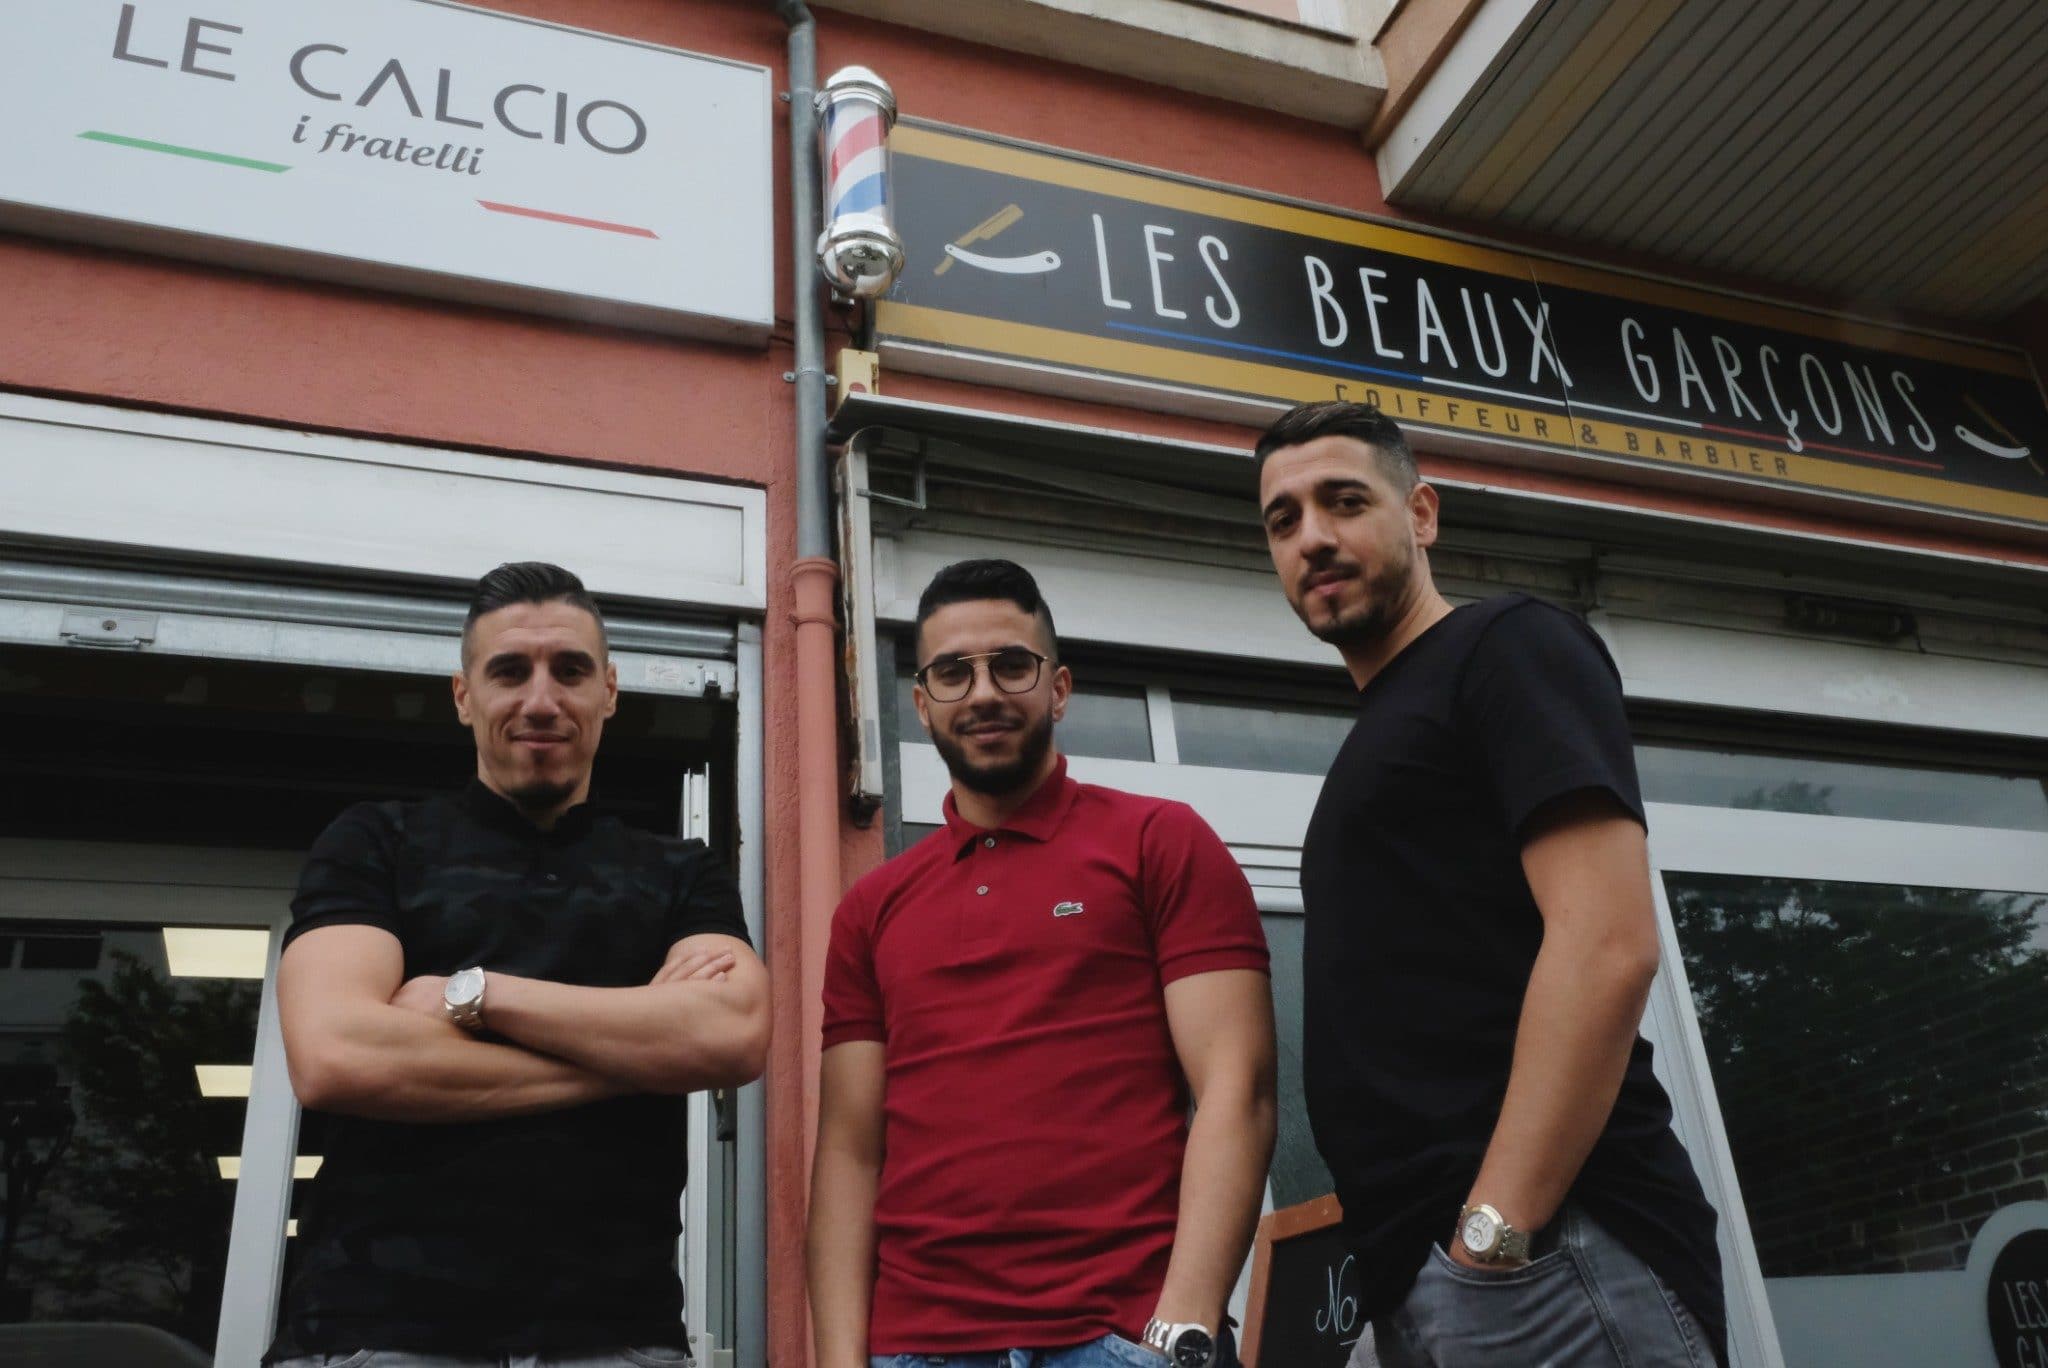 Coiffeur, restaurant, local associatif… Les frères El Jadeyaoui font du bien à l’Elsau